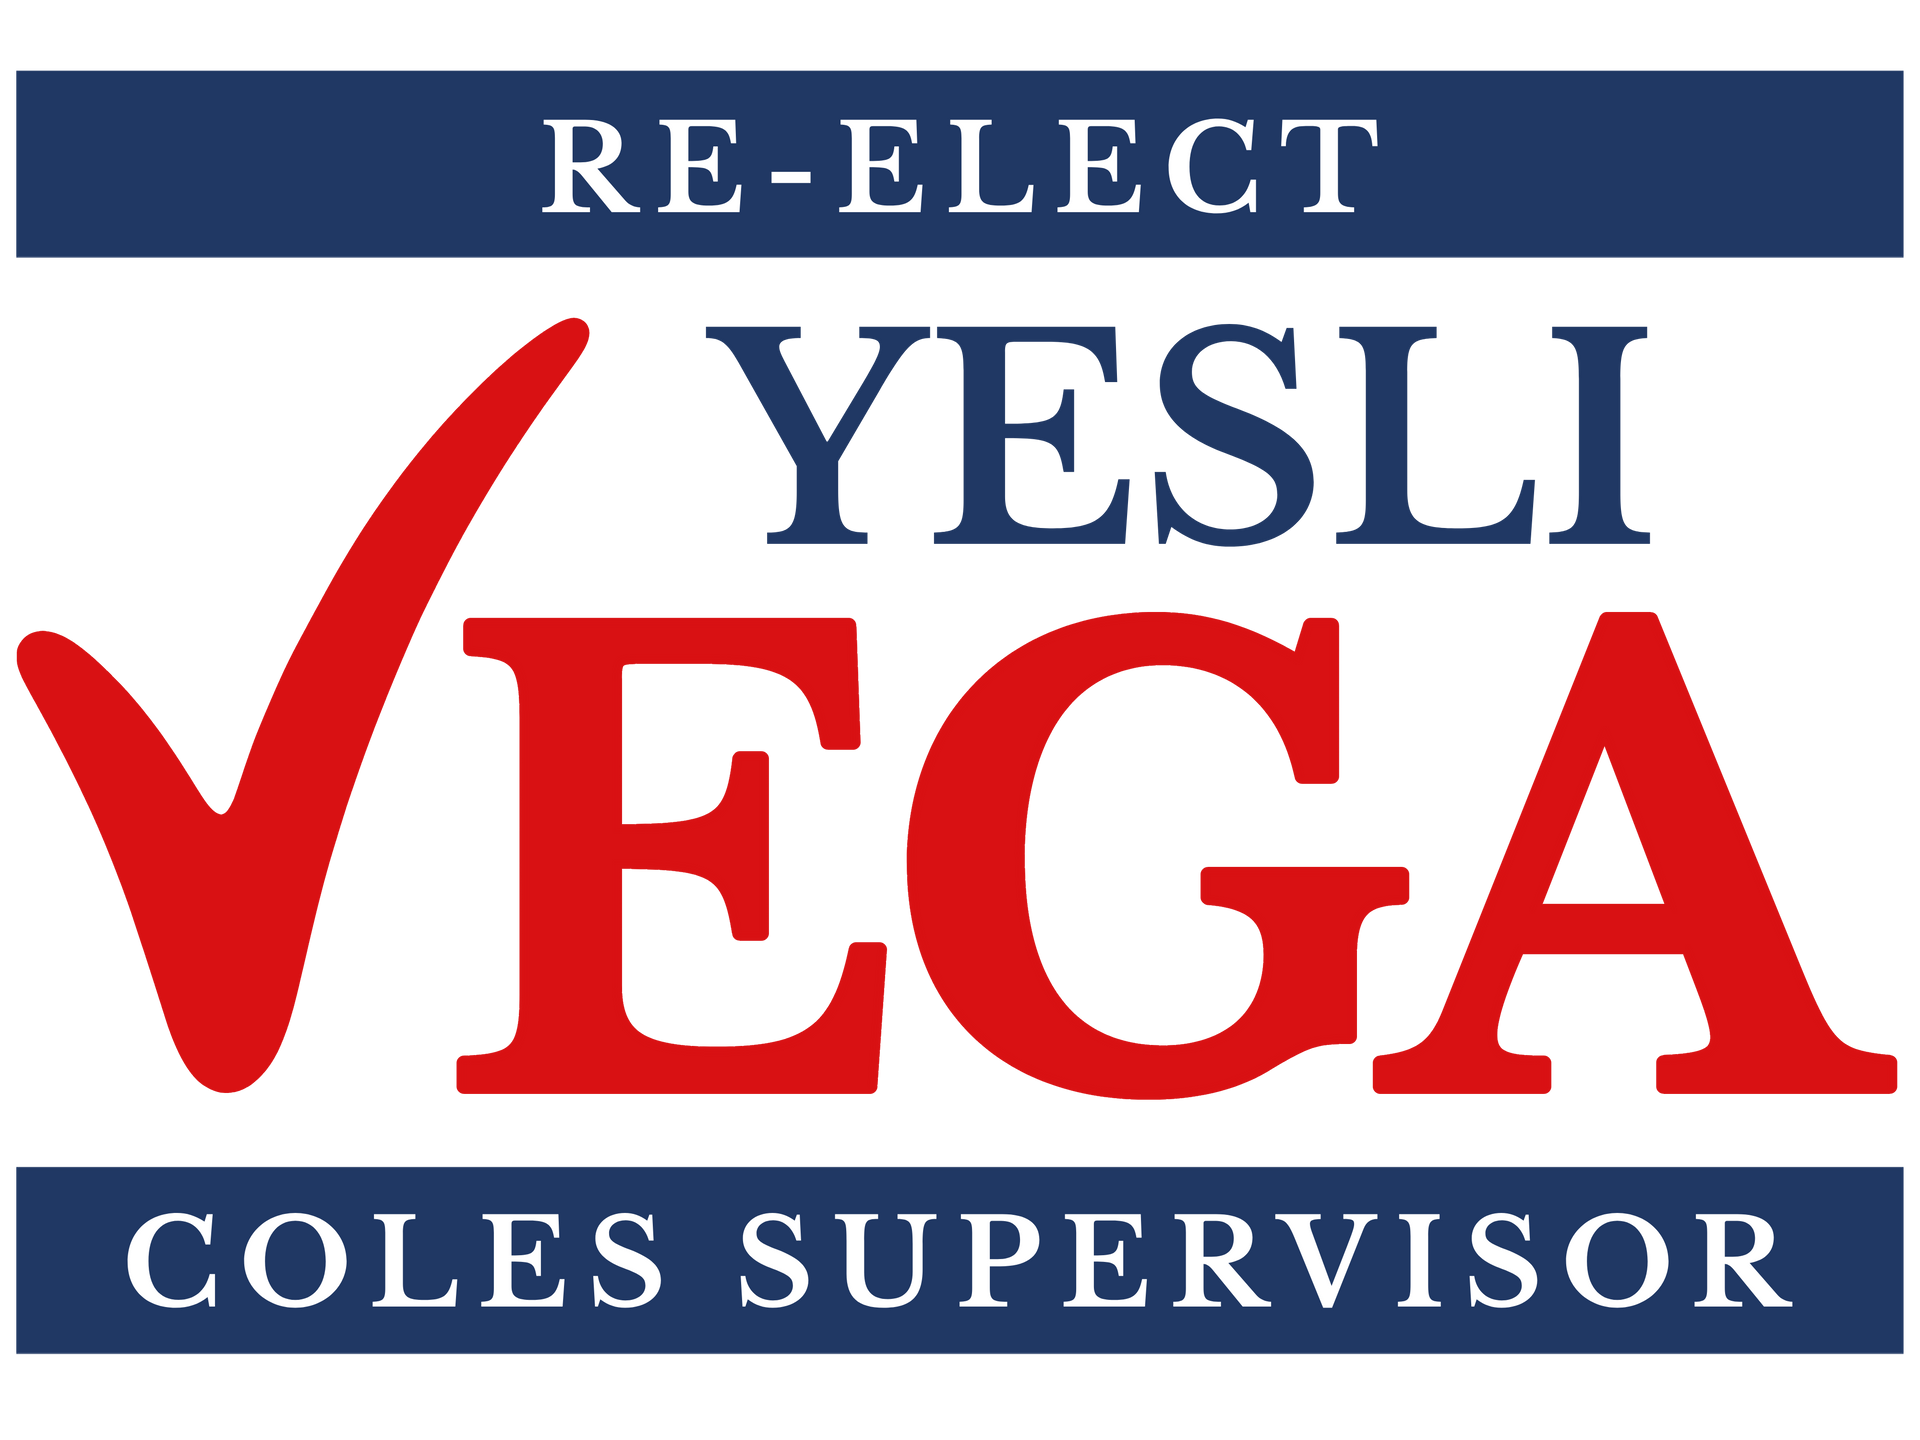 re-elect-yesli-vega-coles-district